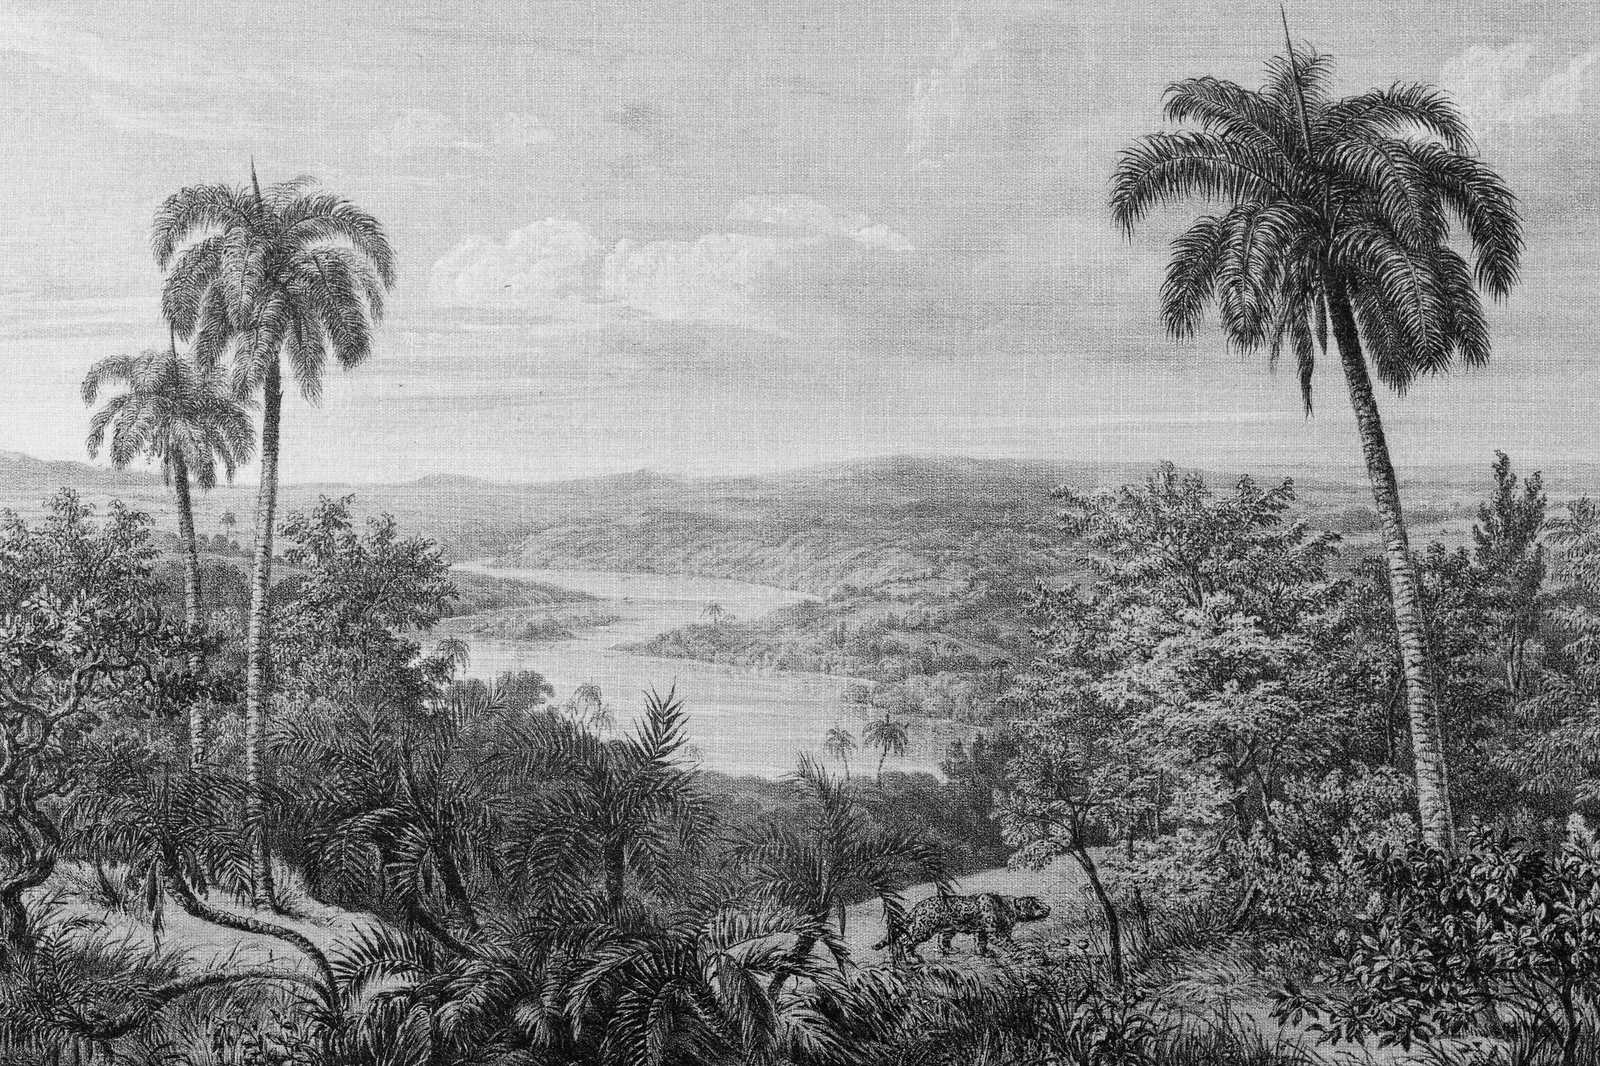             Lienzo Vista de la selva tropical con óptica de textura de lino - 0,90 m x 0,60 m
        